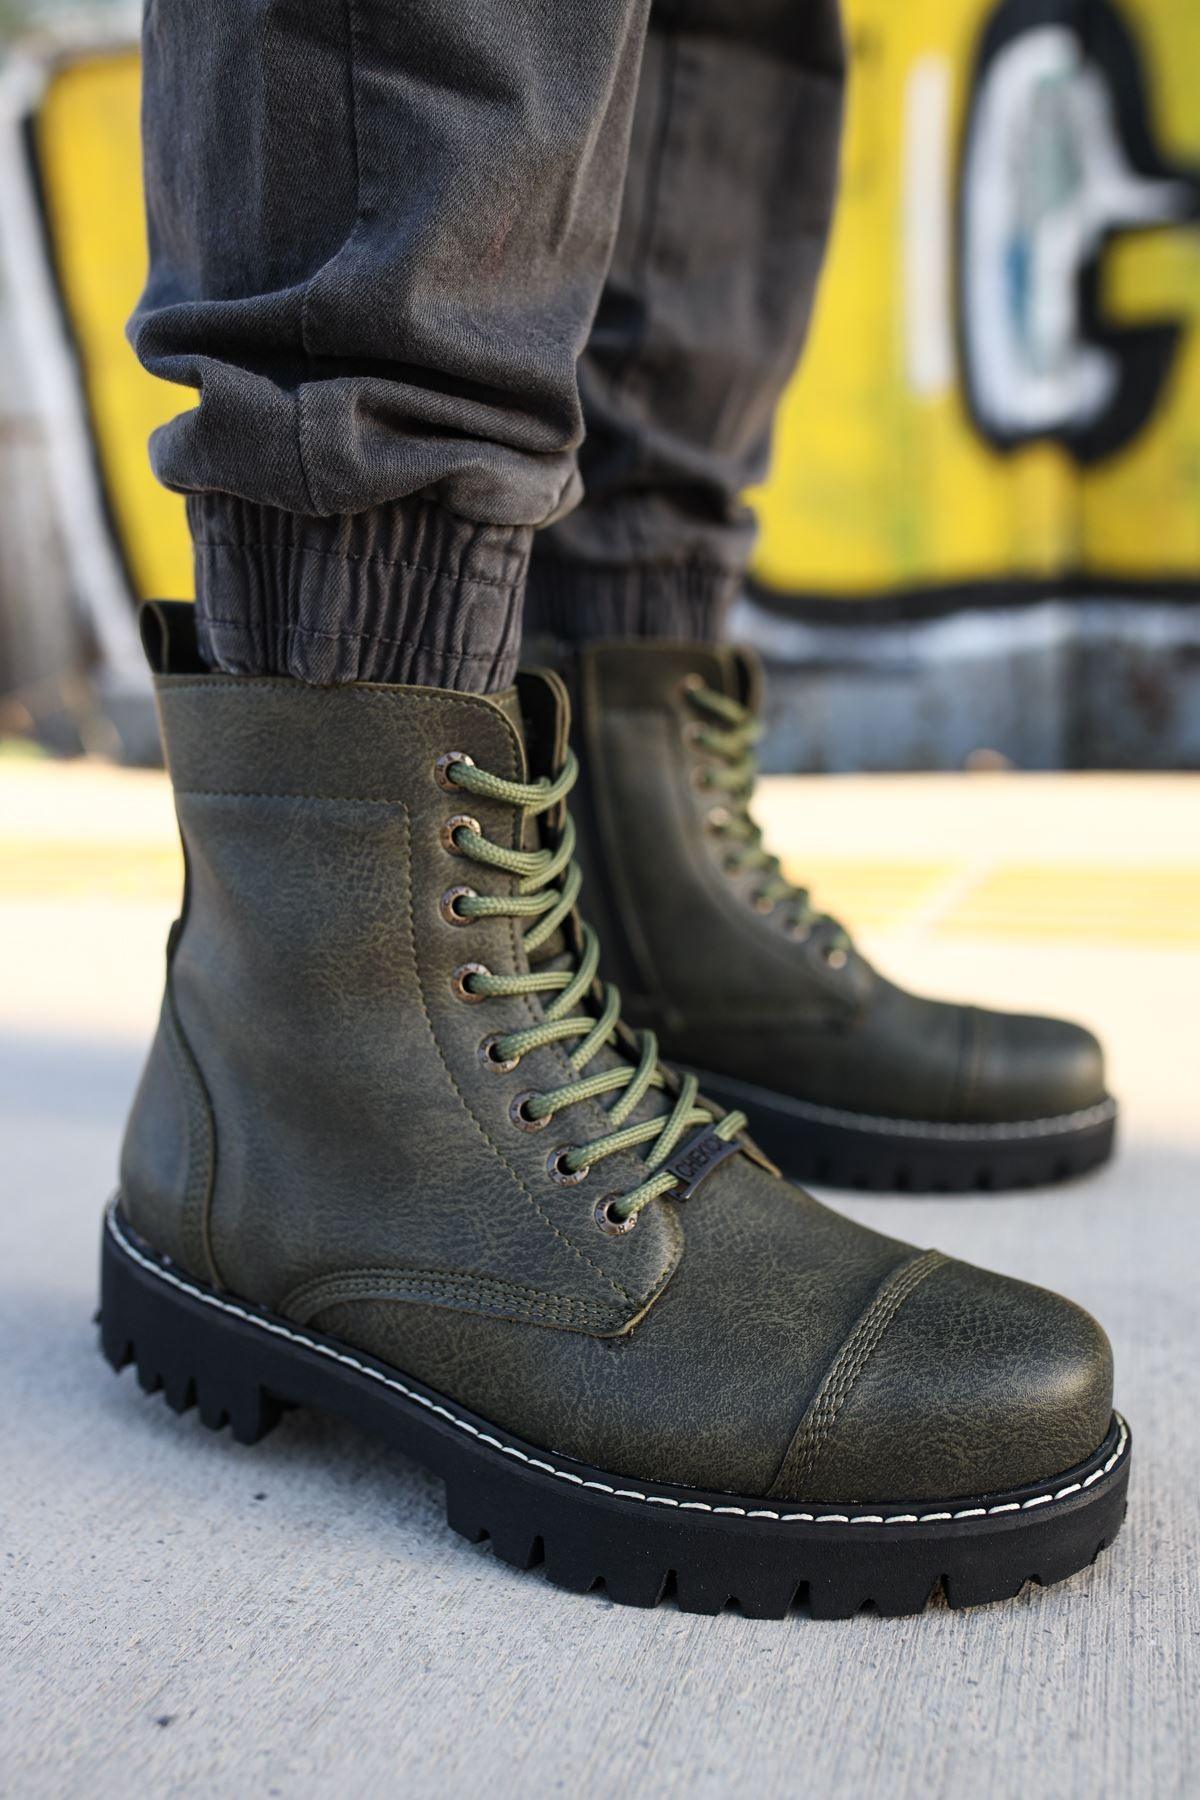 CH009 Men's Leather Khaki-Black Sole Casual Winter Boots - STREET MODE ™